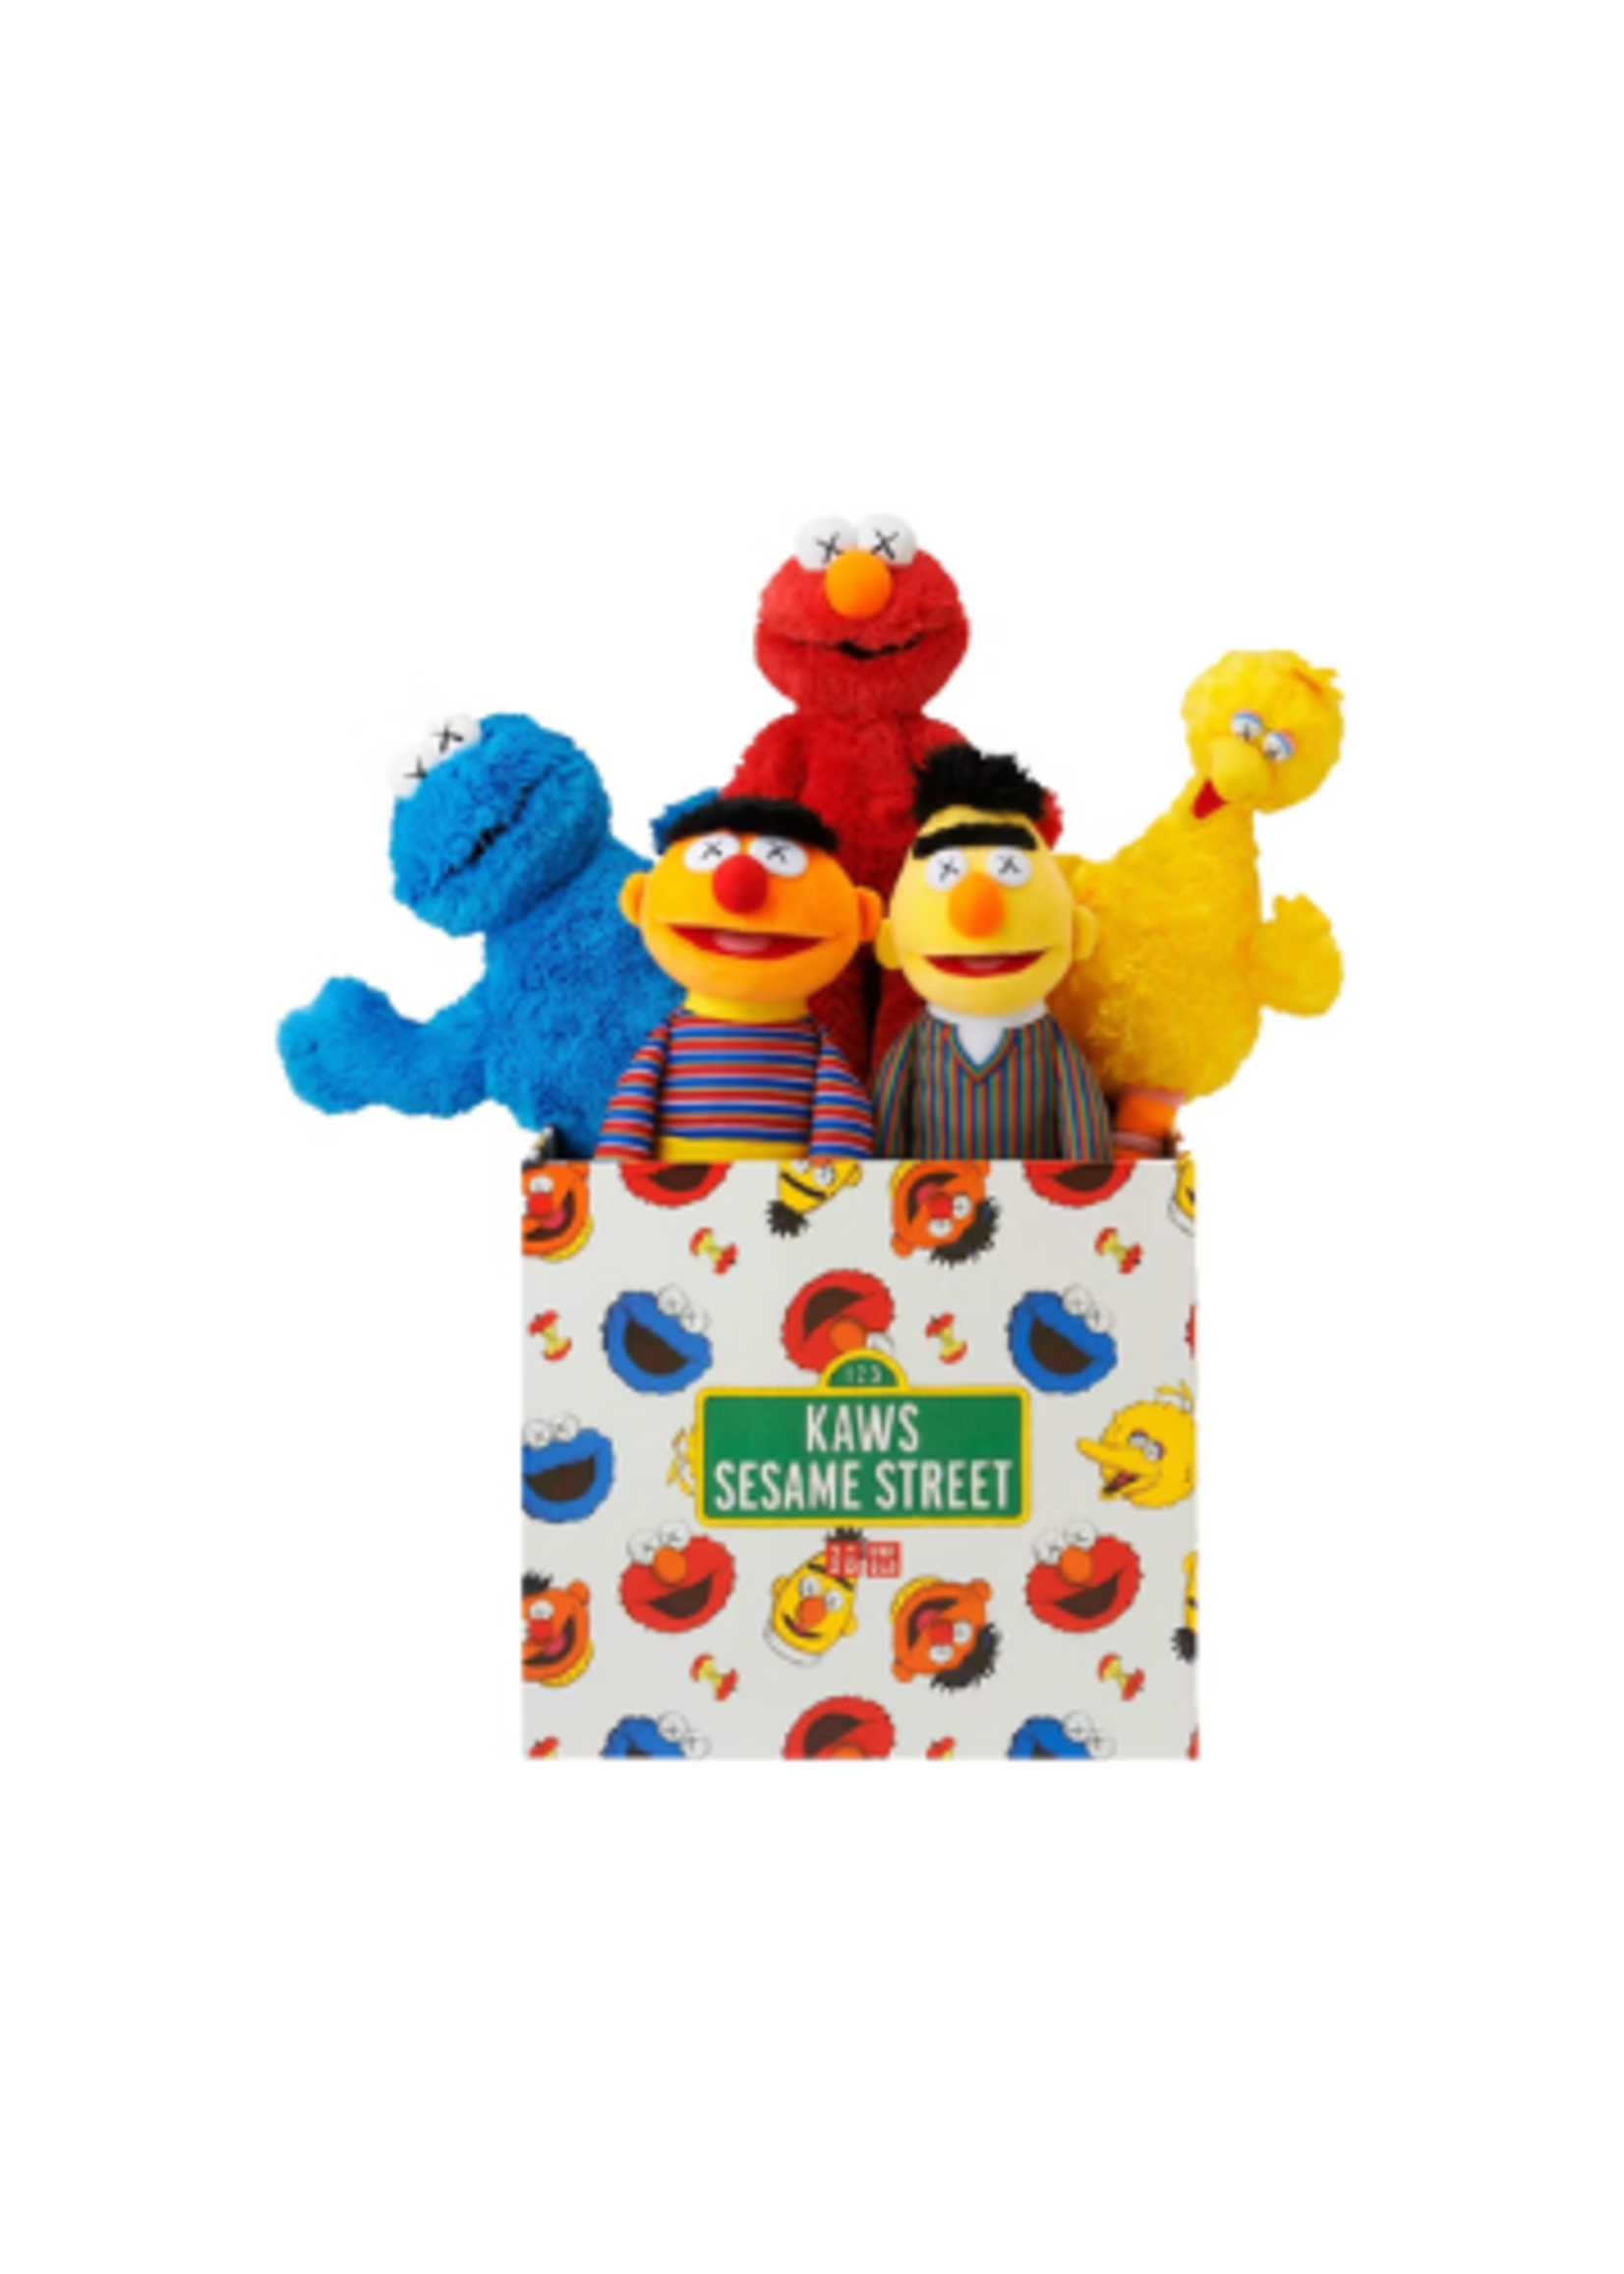 KAWS Sesame Street Uniqlo Plush Toy Complete Box Set -